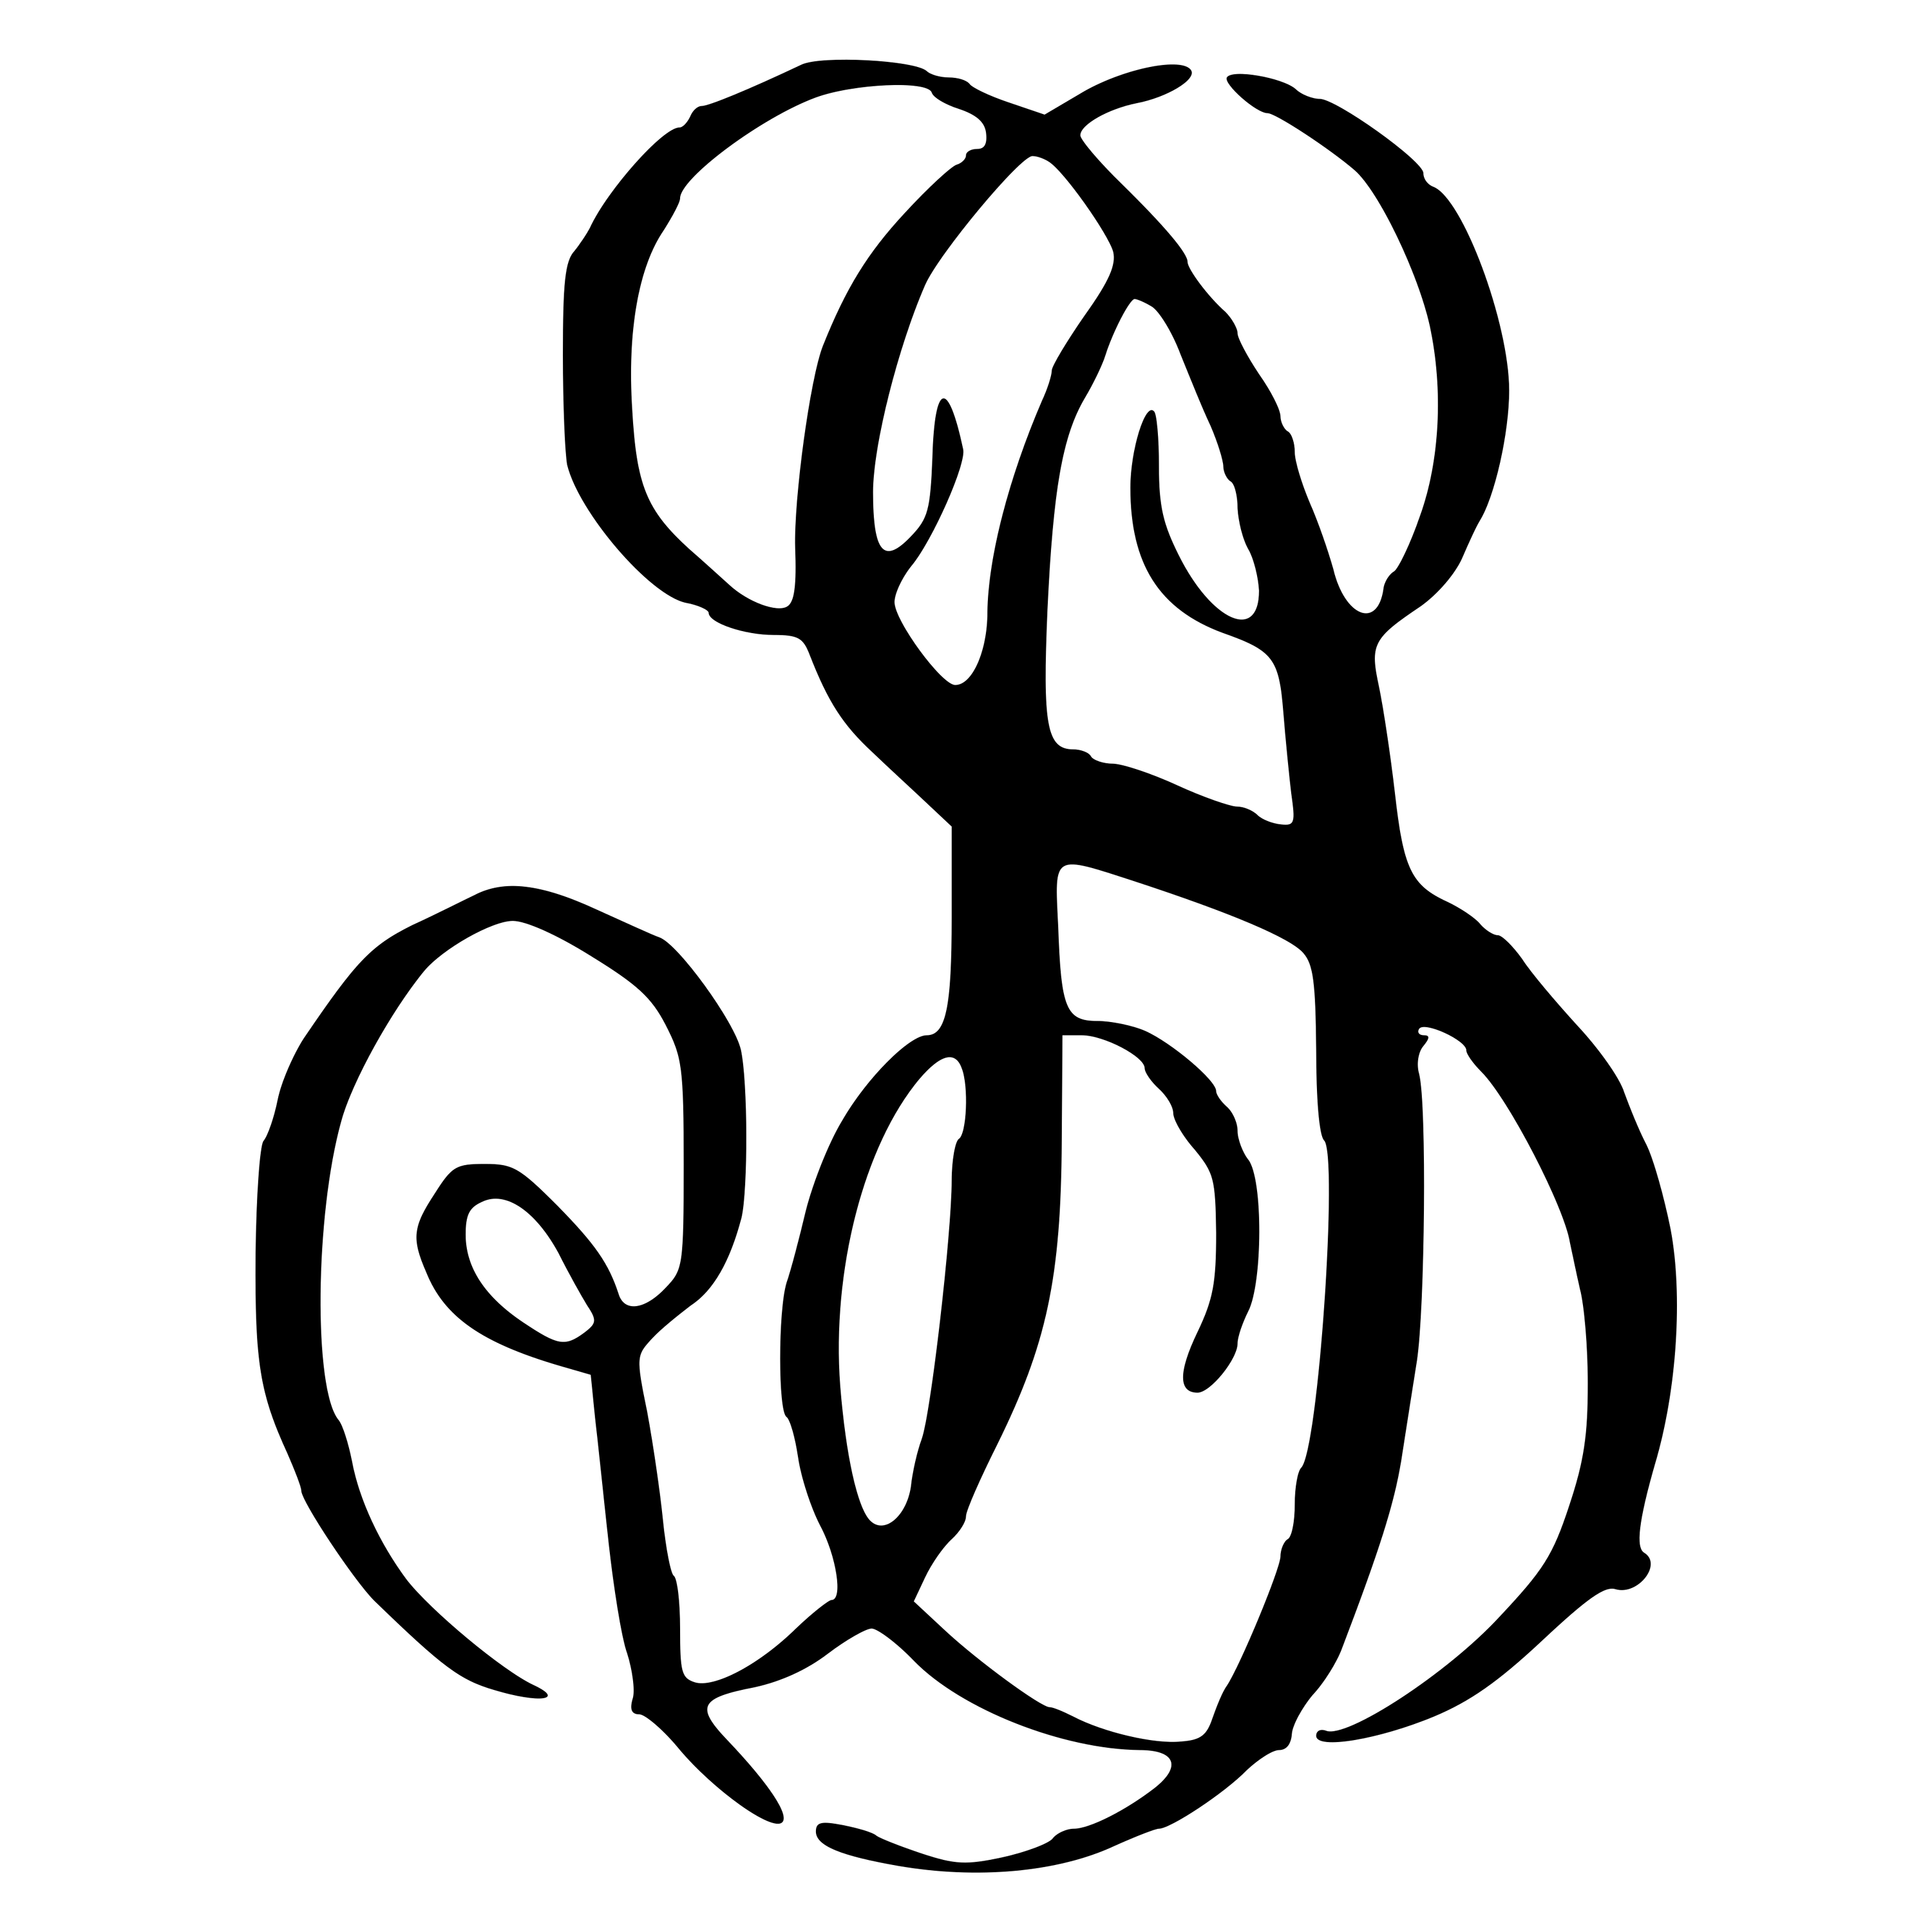 Librairie Delaunay 1818 Logo  Transparent Image